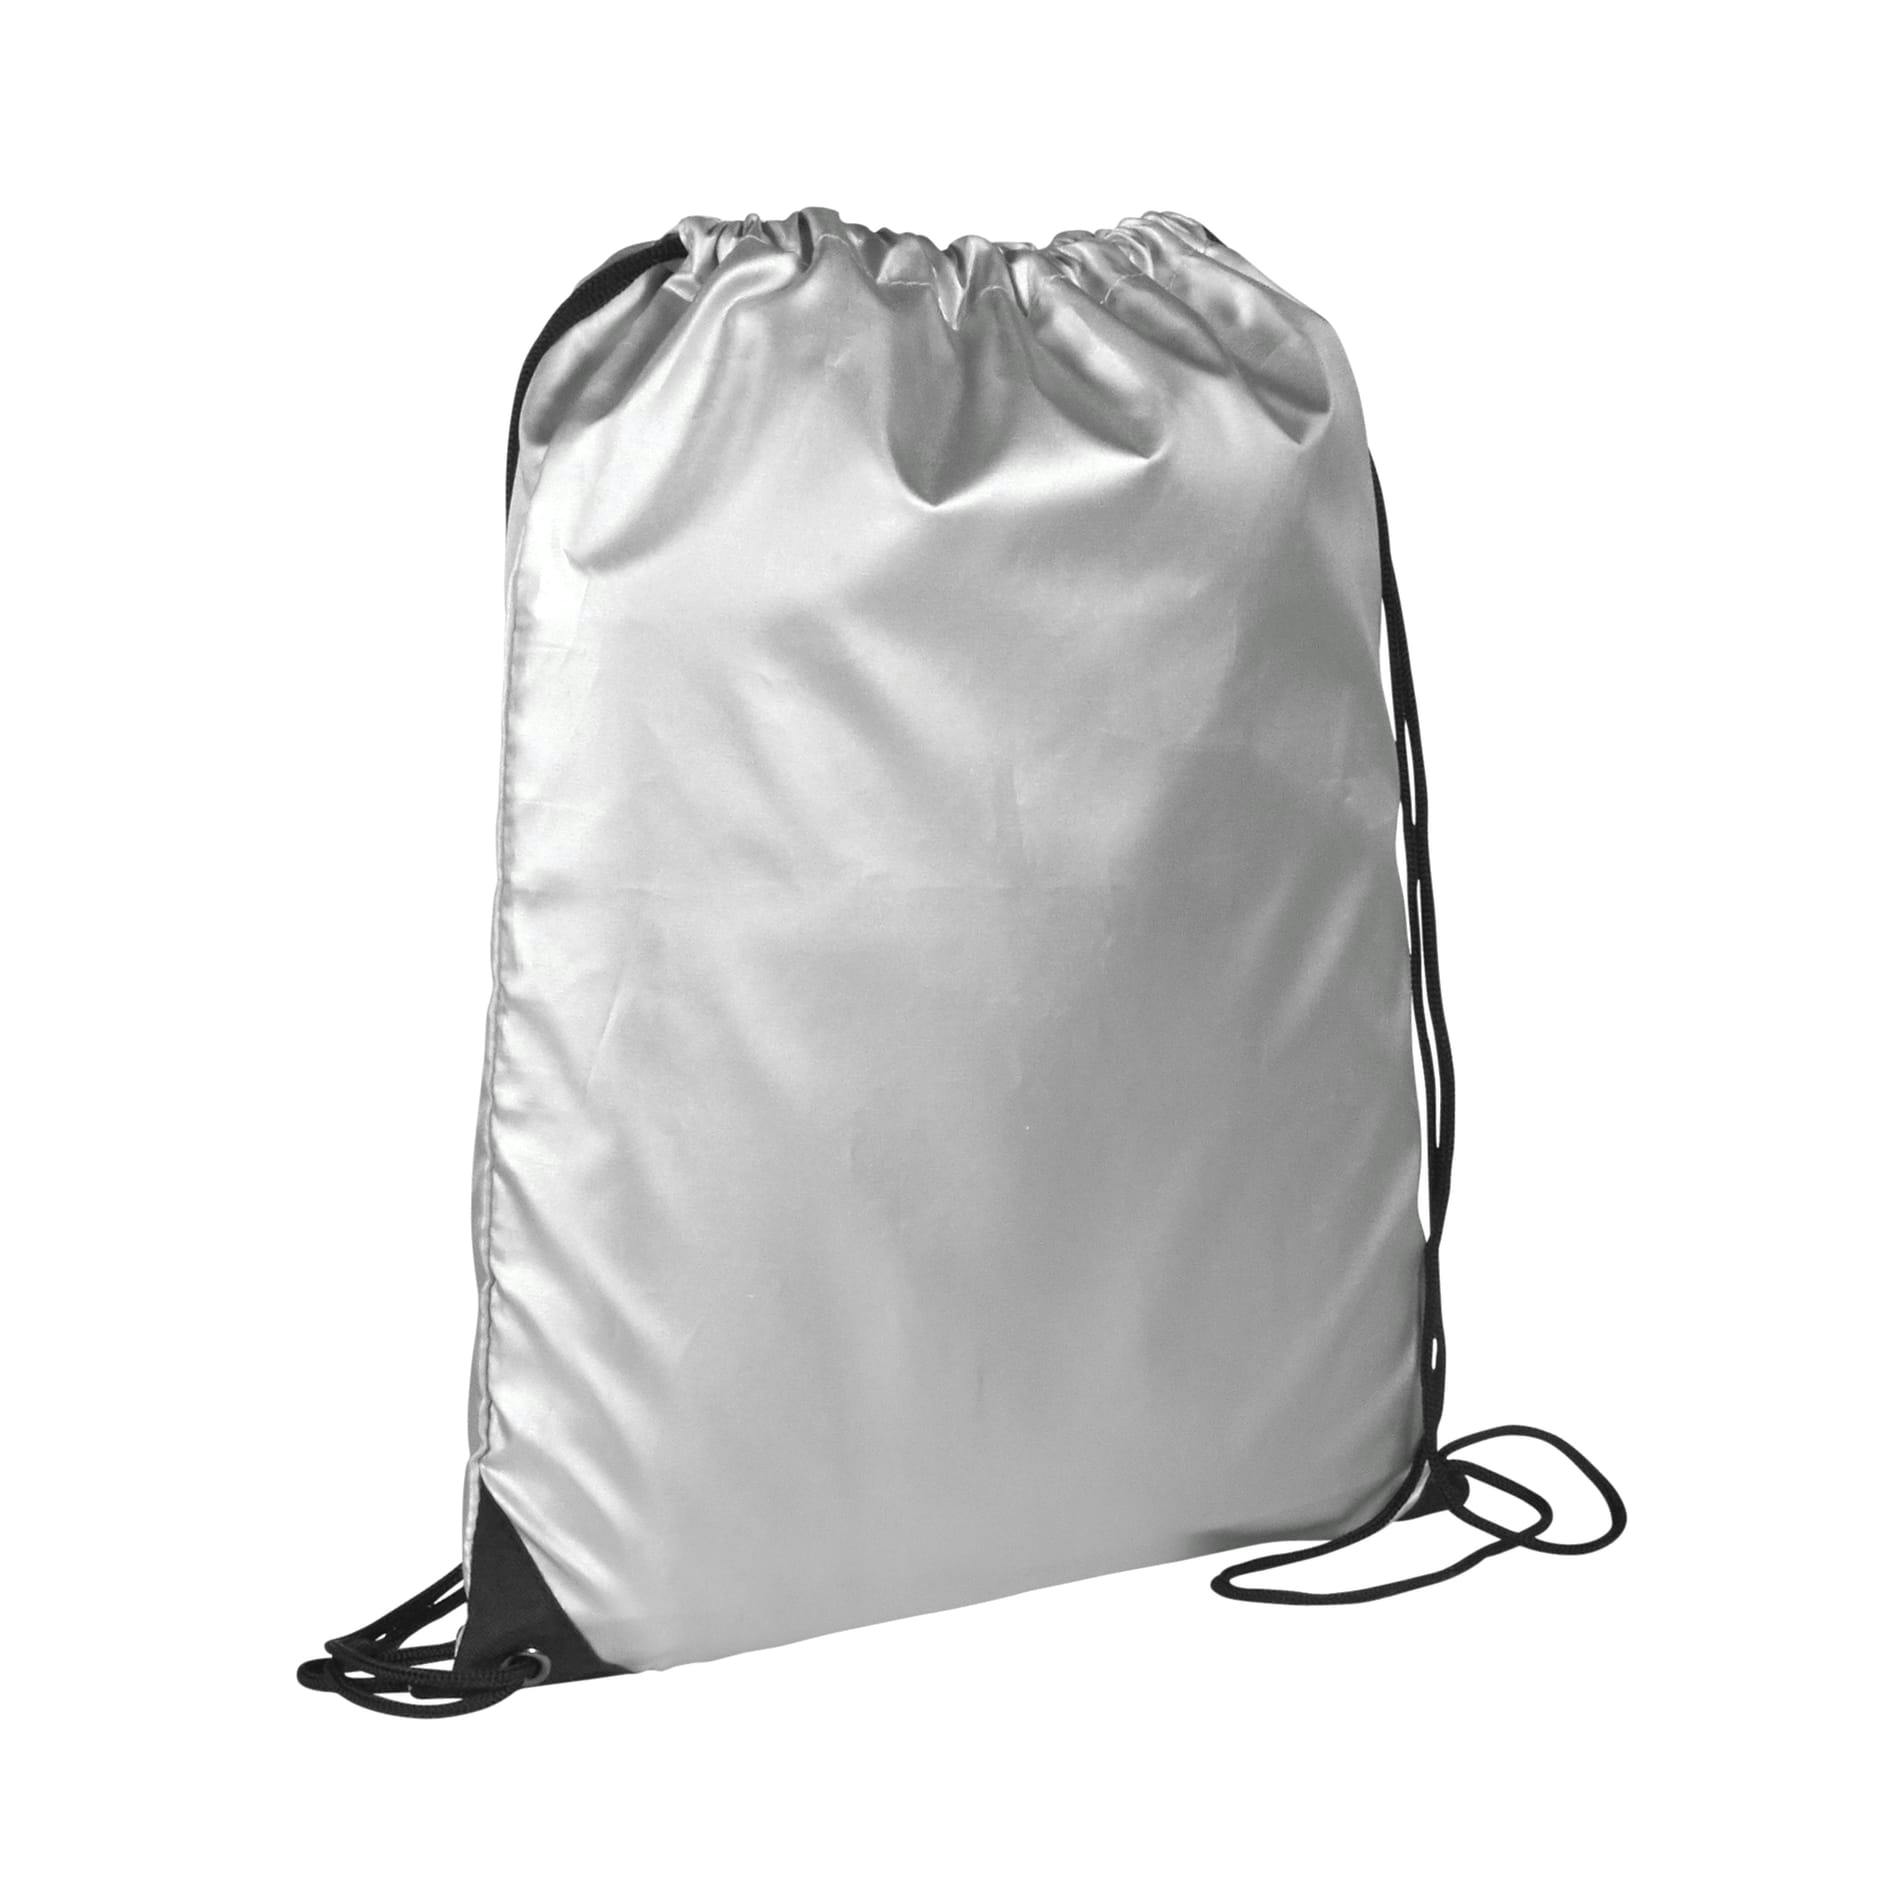 Oriole Reflective Drawstring Bag - additional Image 1